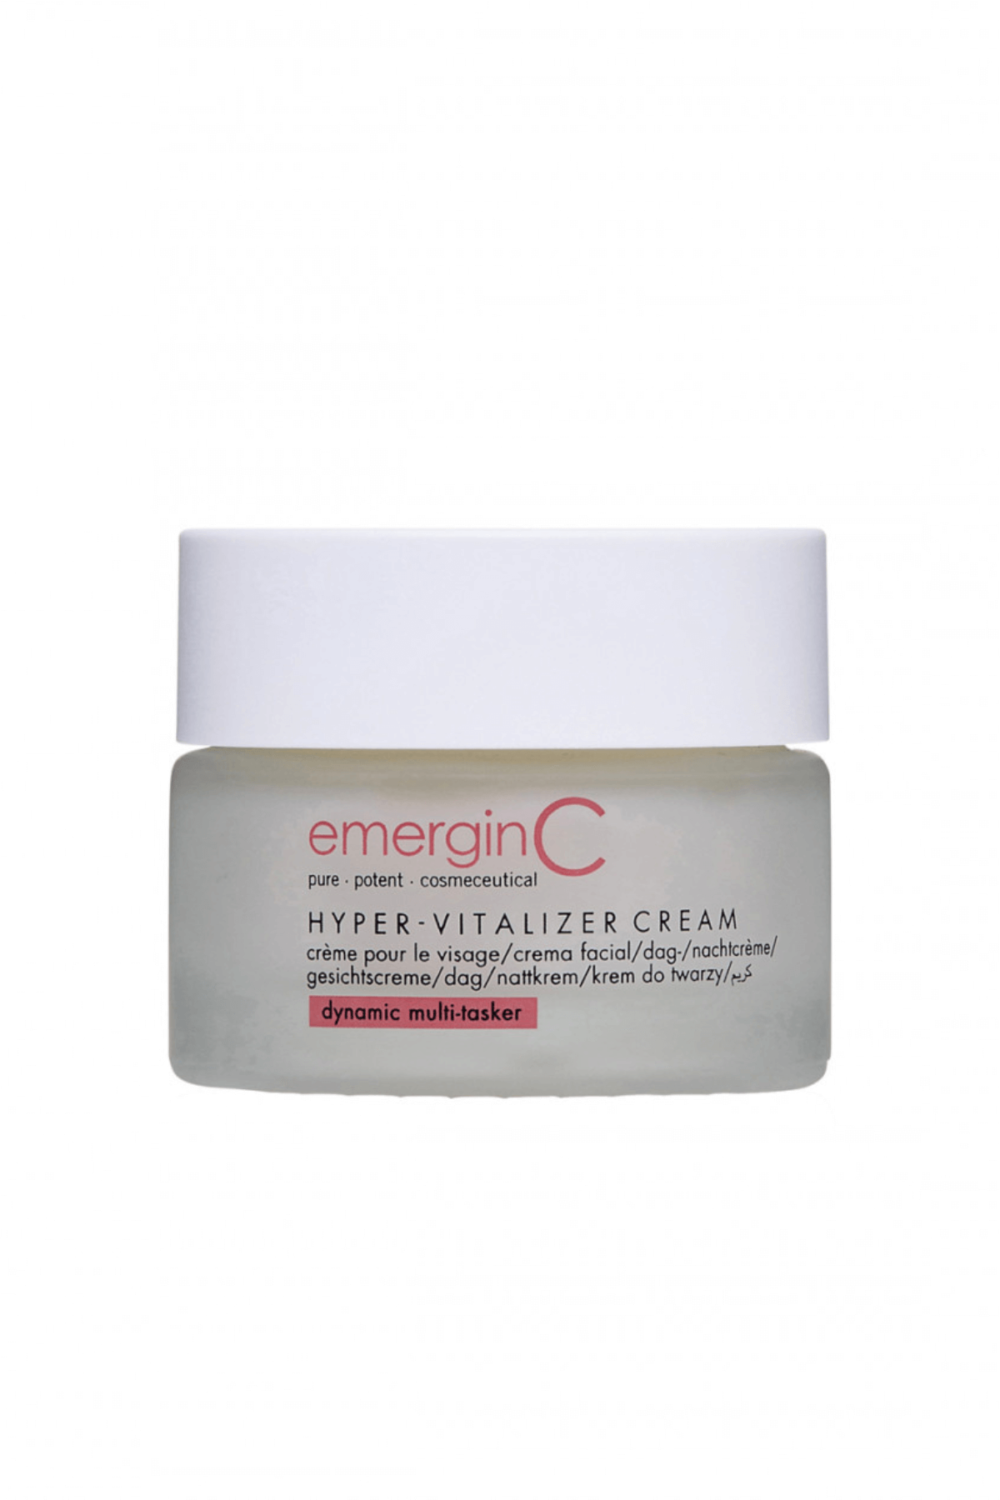 emerginC hyper vitalizer cream